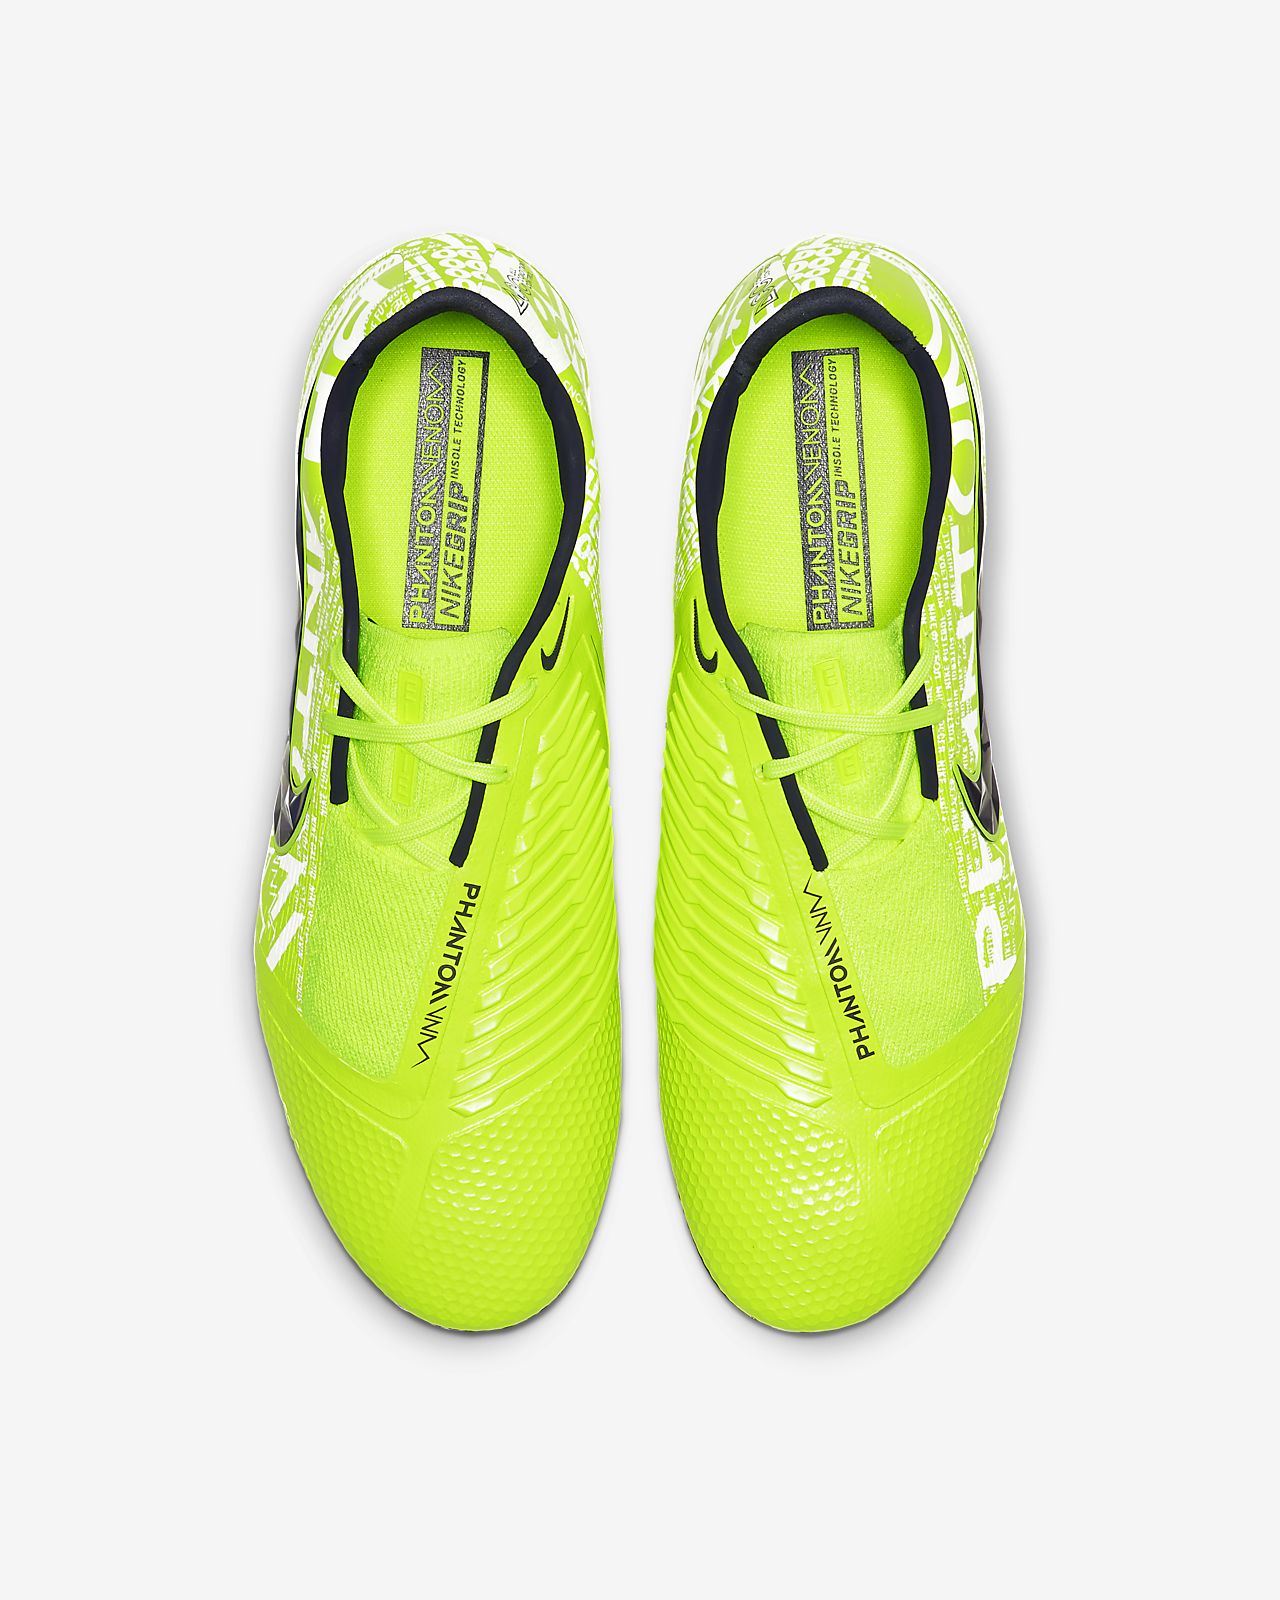 Nike Phantom VSN Club DF FG MG Soccer Cleats Size 9.5